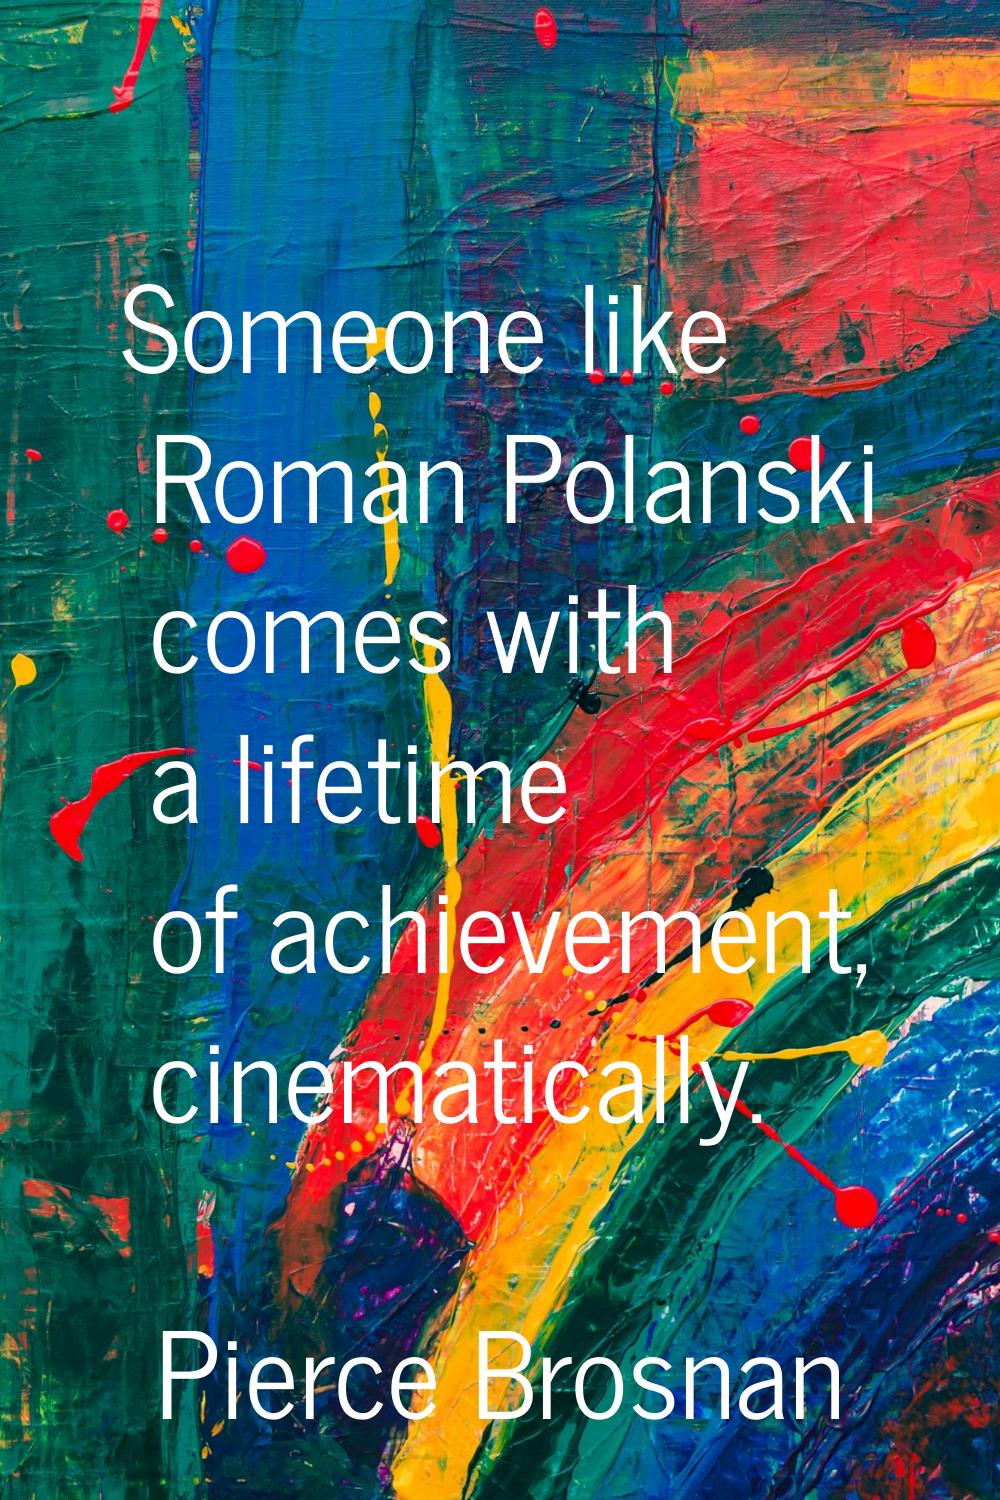 Someone like Roman Polanski comes with a lifetime of achievement, cinematically.